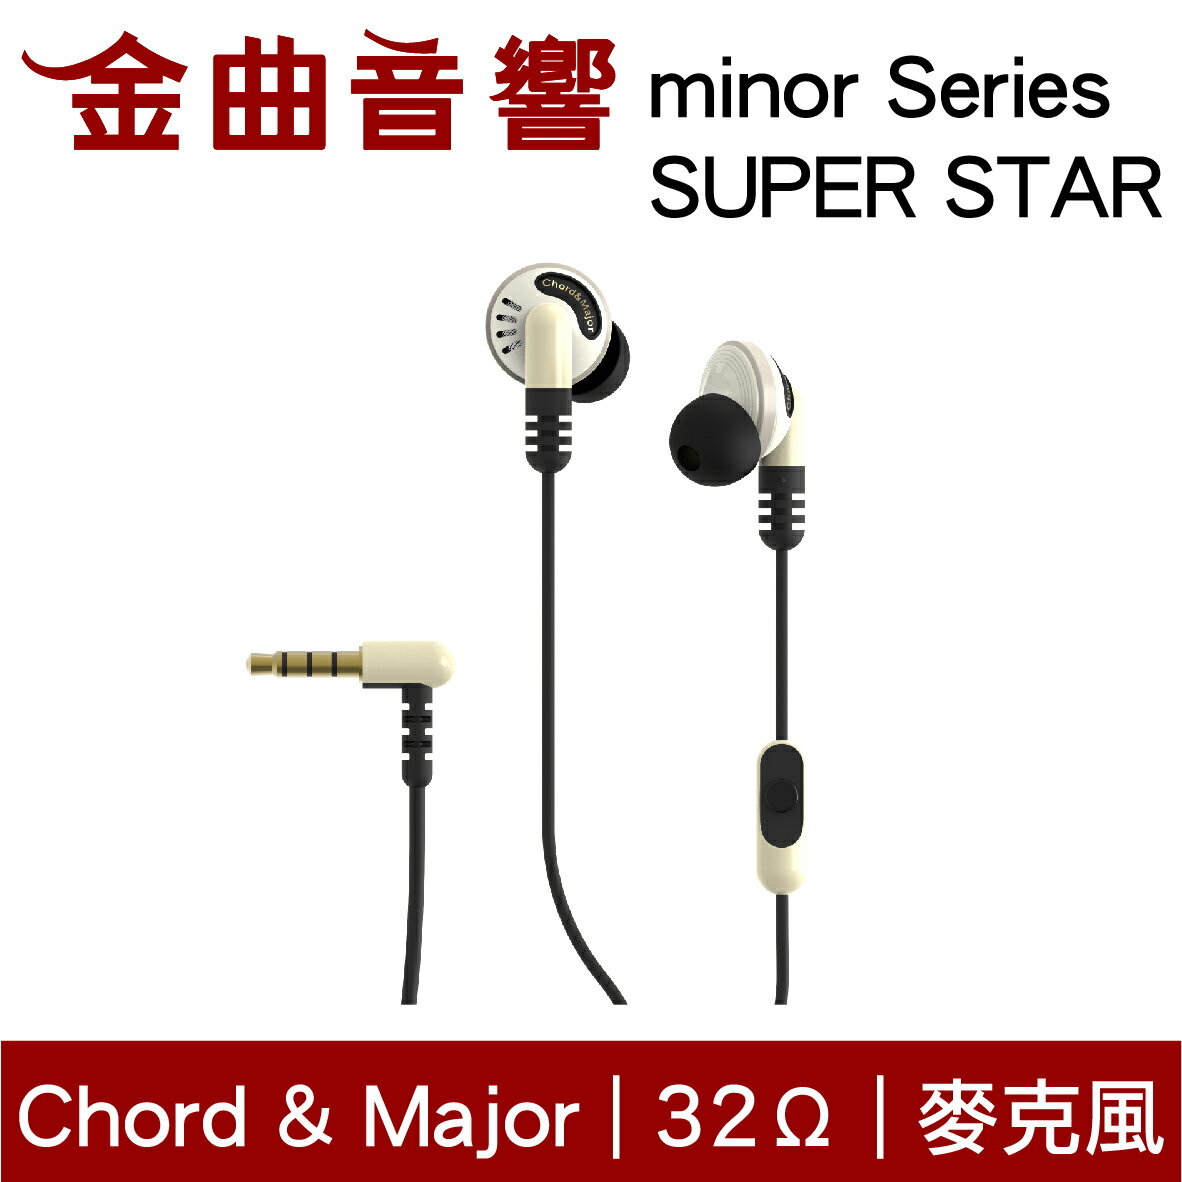 Chord & Major 小調性耳機 minor series SUPER STAR超級巨星 耳道式 耳機 | 金曲音響